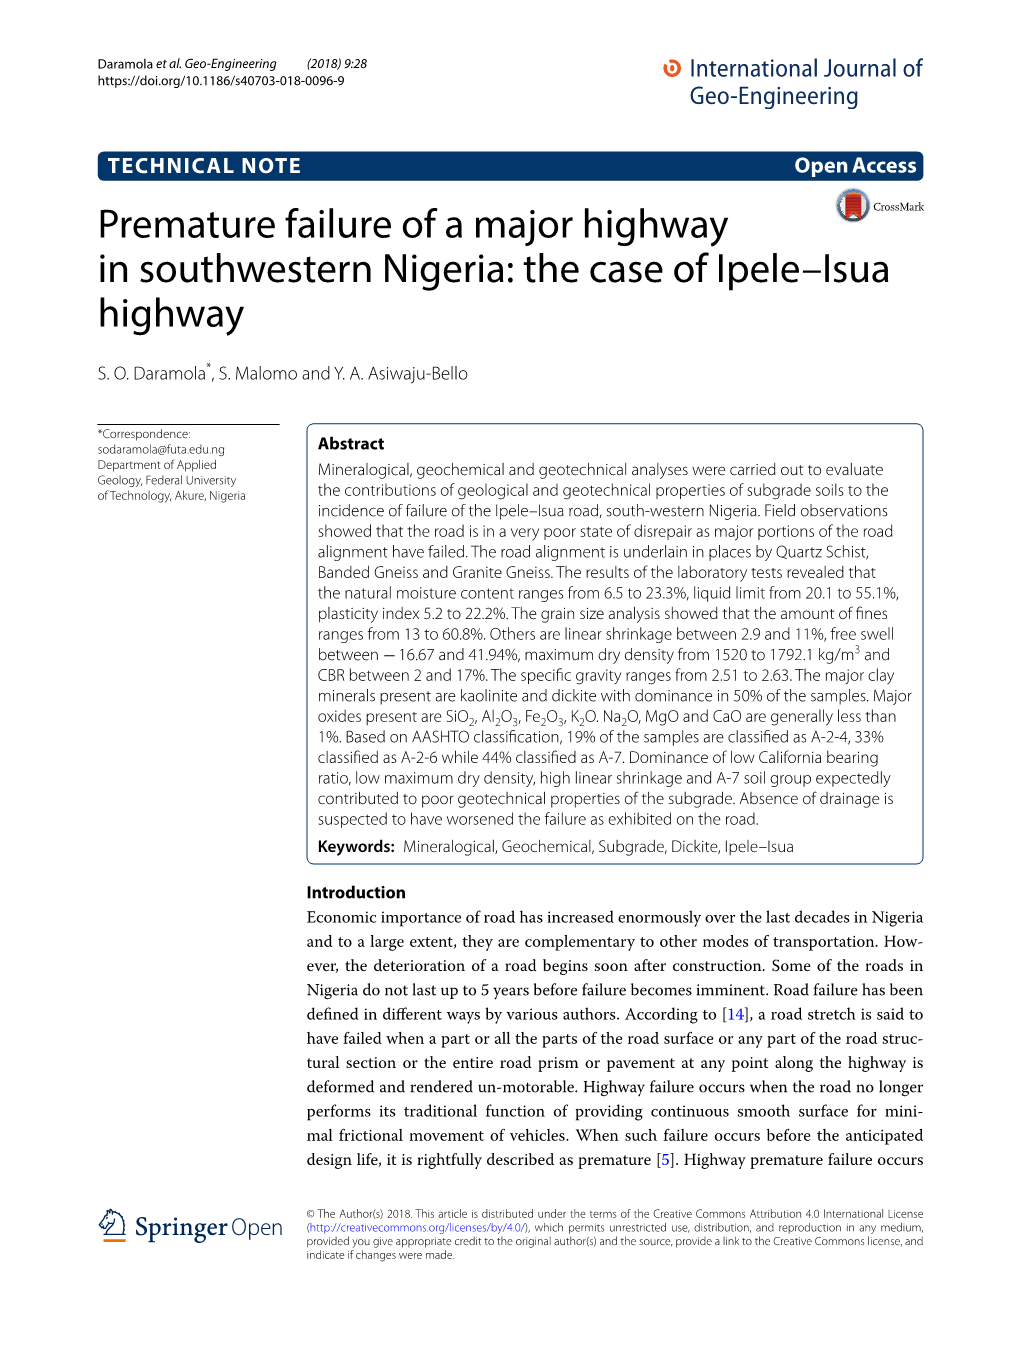 The Case of Ipele–Isua Highway